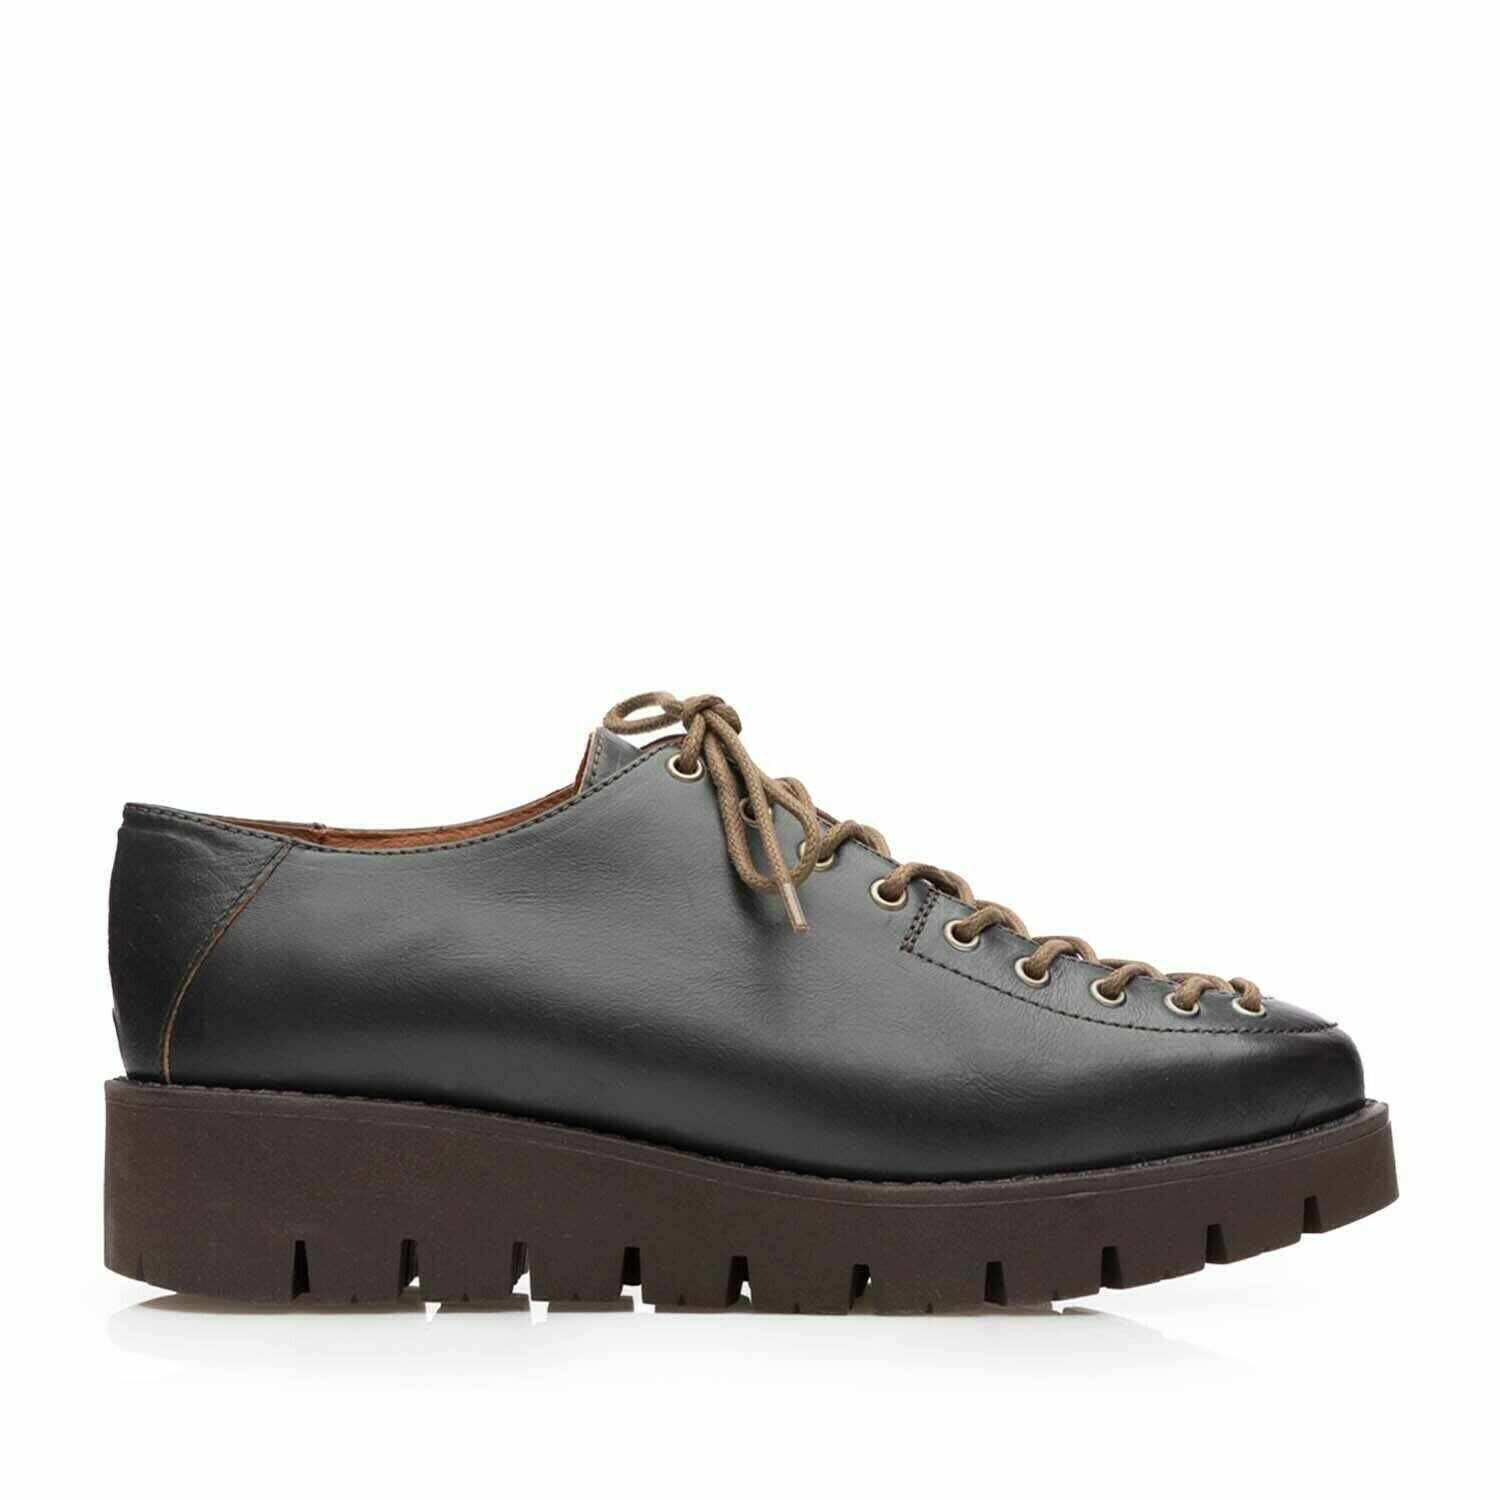 Pantofi casual cu siret pana in varfdama din piele naturala, Leofex - 194 Gri inchis Box